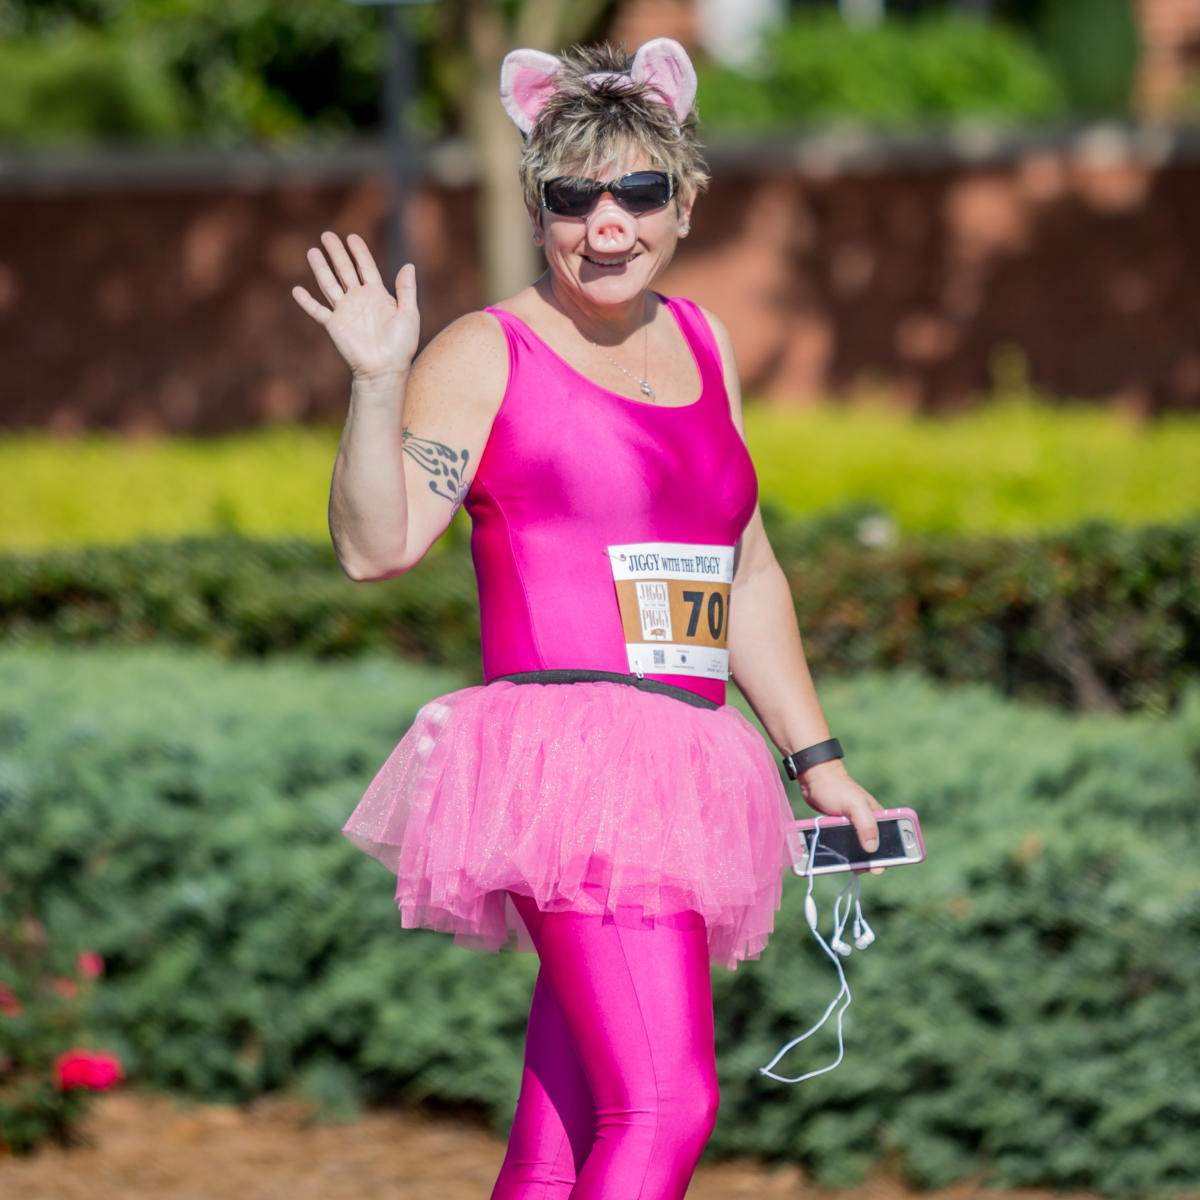 Woman dressed in pig costume running 5k